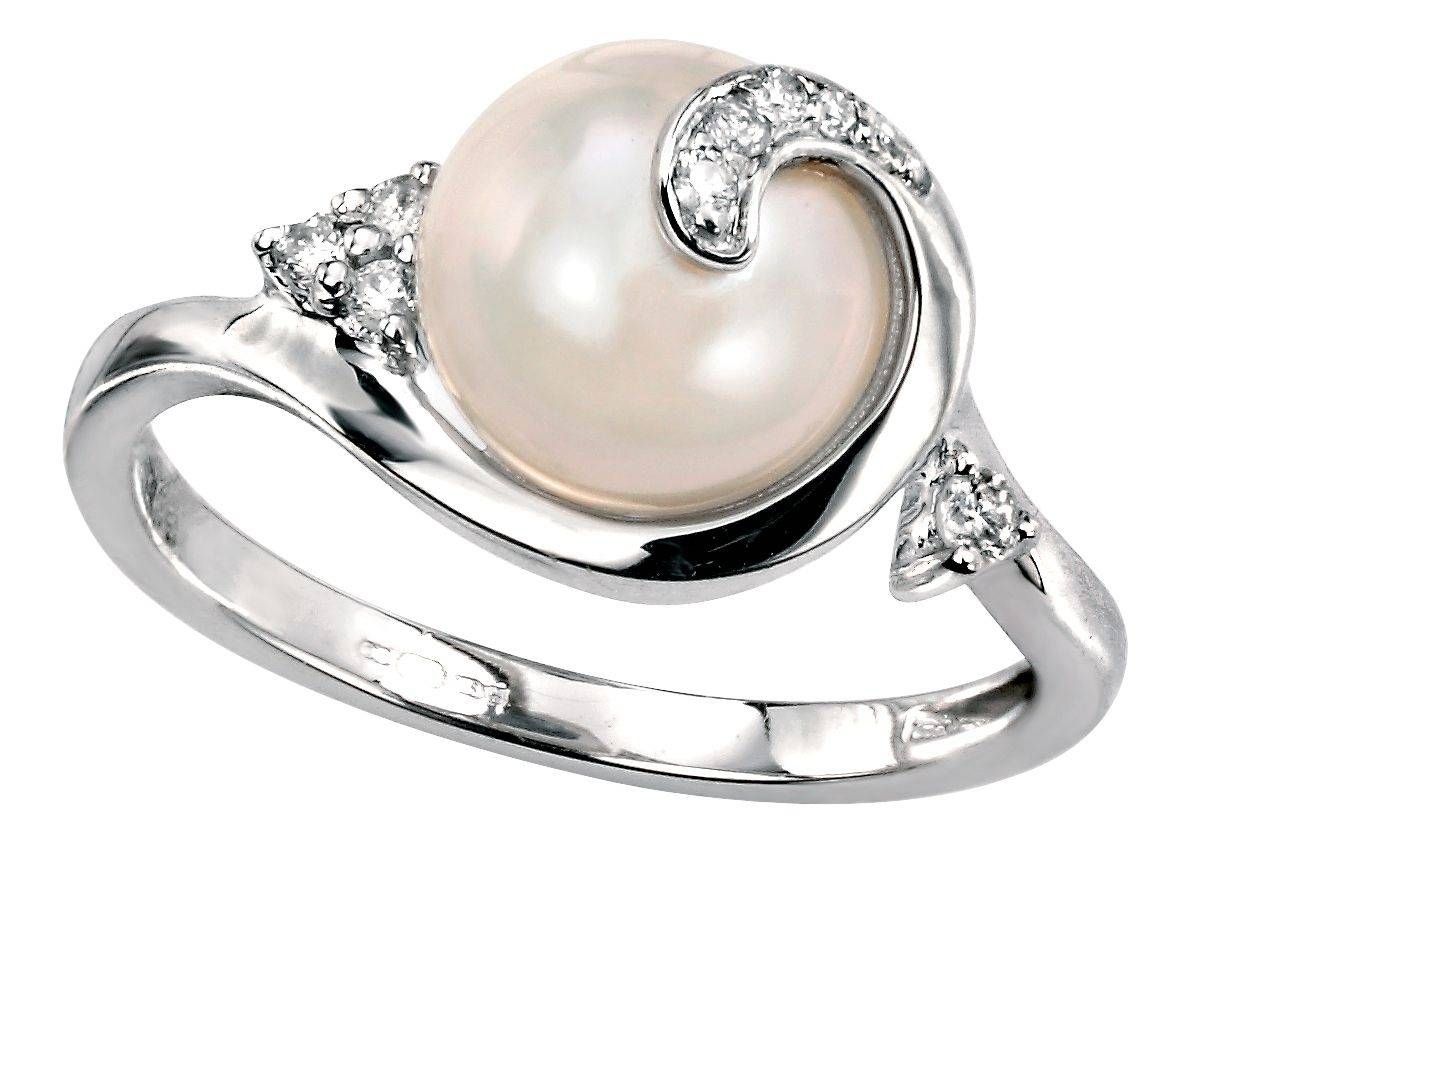 Engagement Rings : Wedding Rings Stunning Engagement Rings Sears Throughout David Tutera Engagement Rings (View 15 of 15)